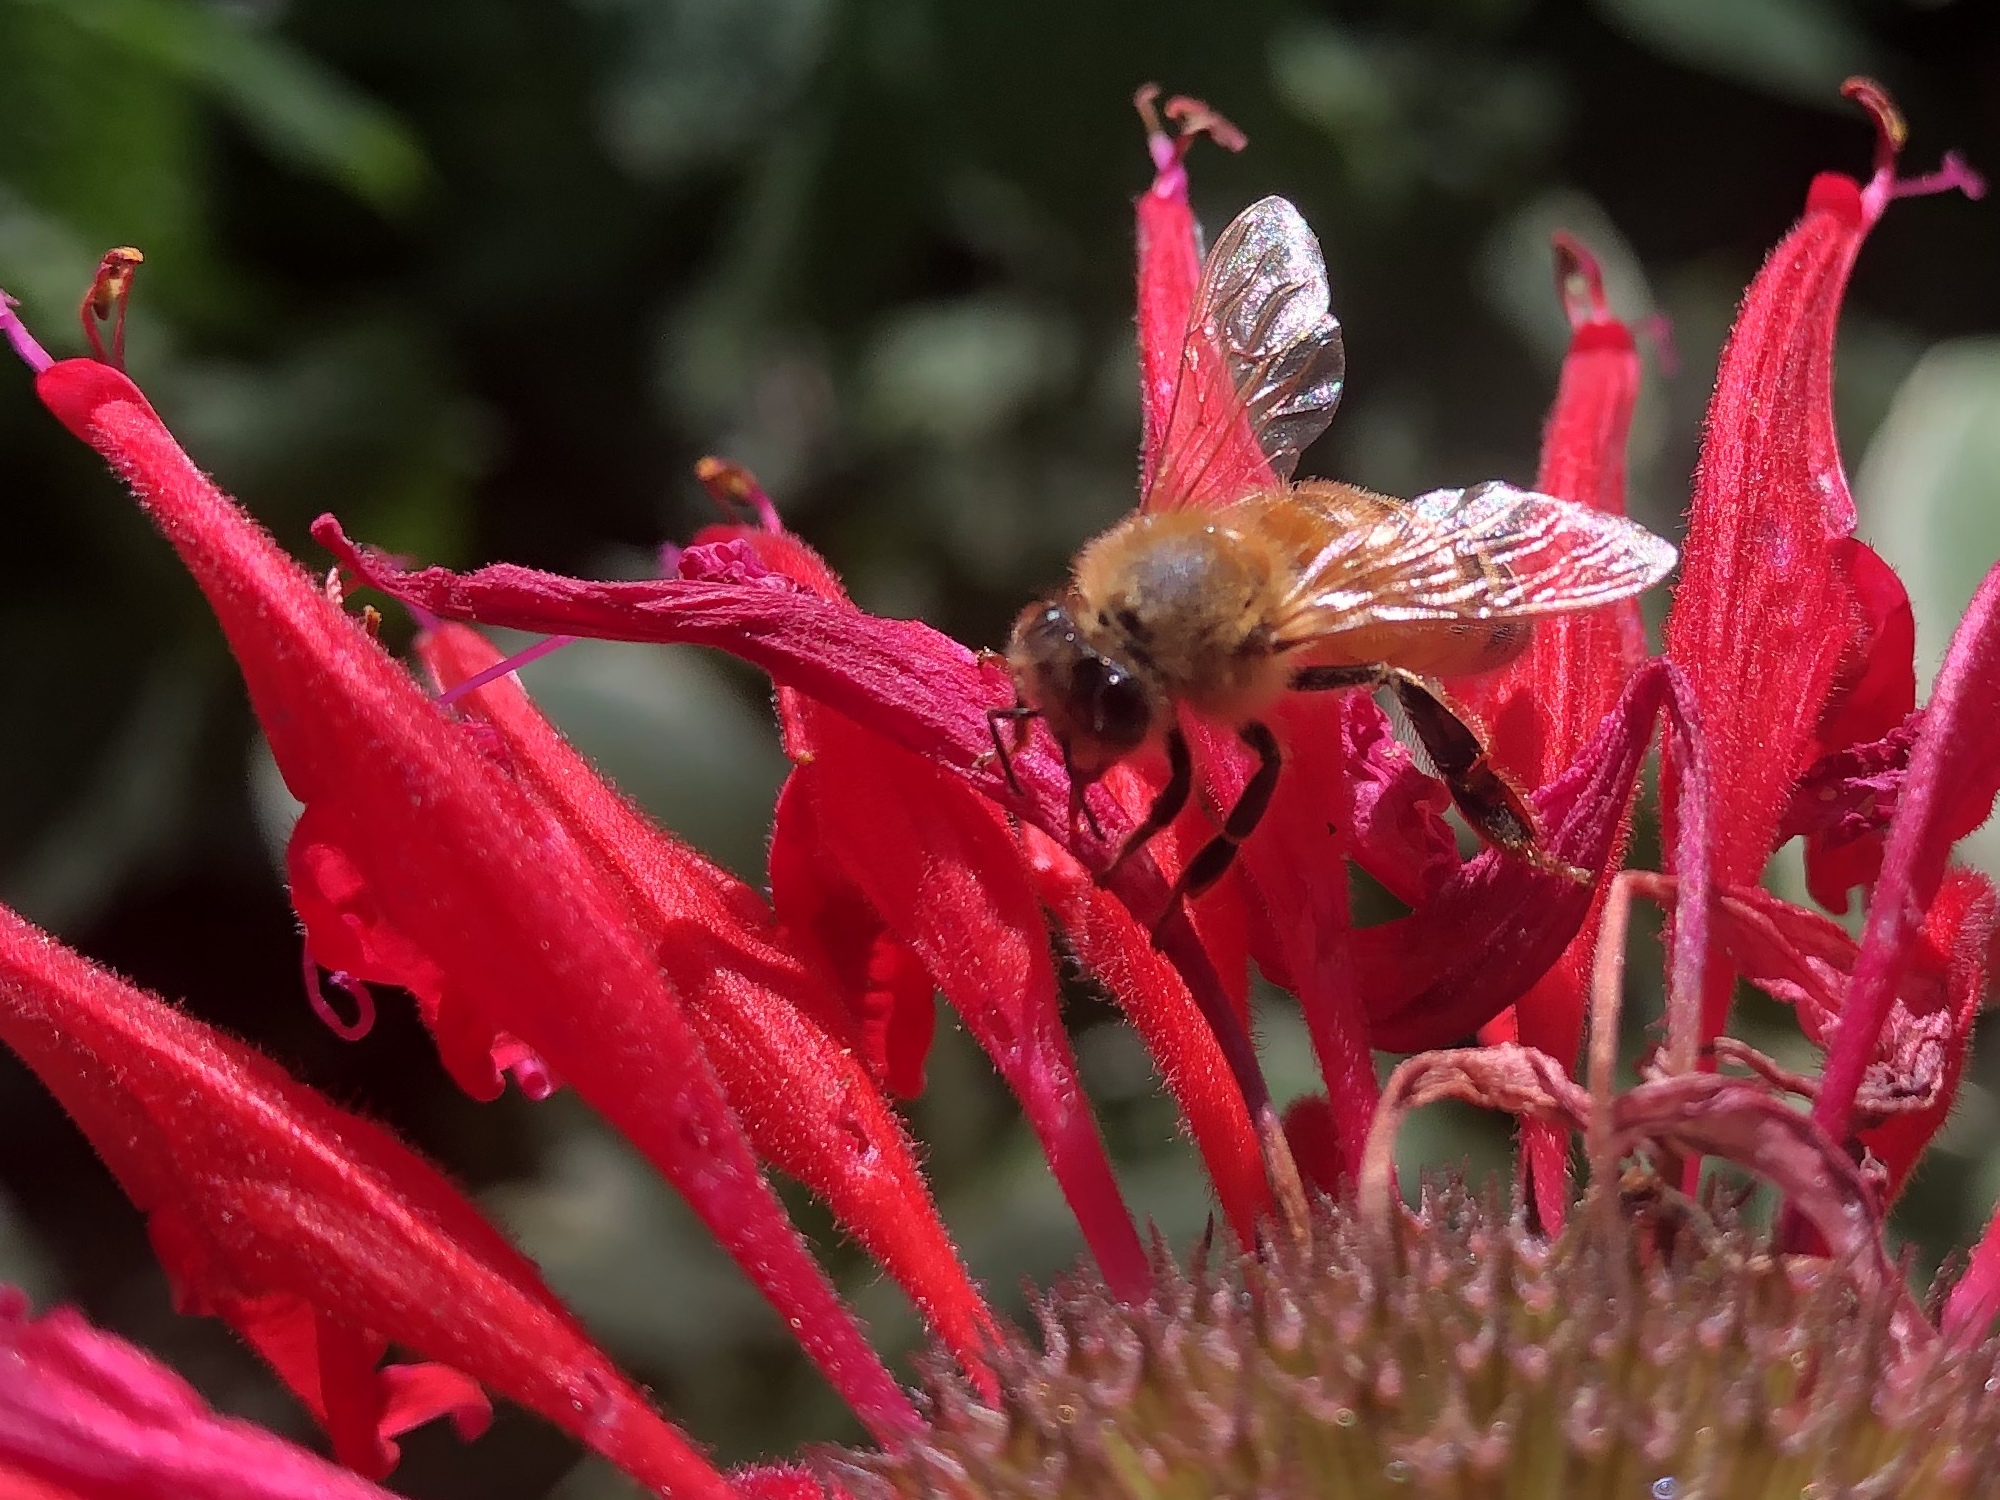 Honey bee on Beebalm near Agawa Path in Madison, Wisconsin on July 11, 2021.